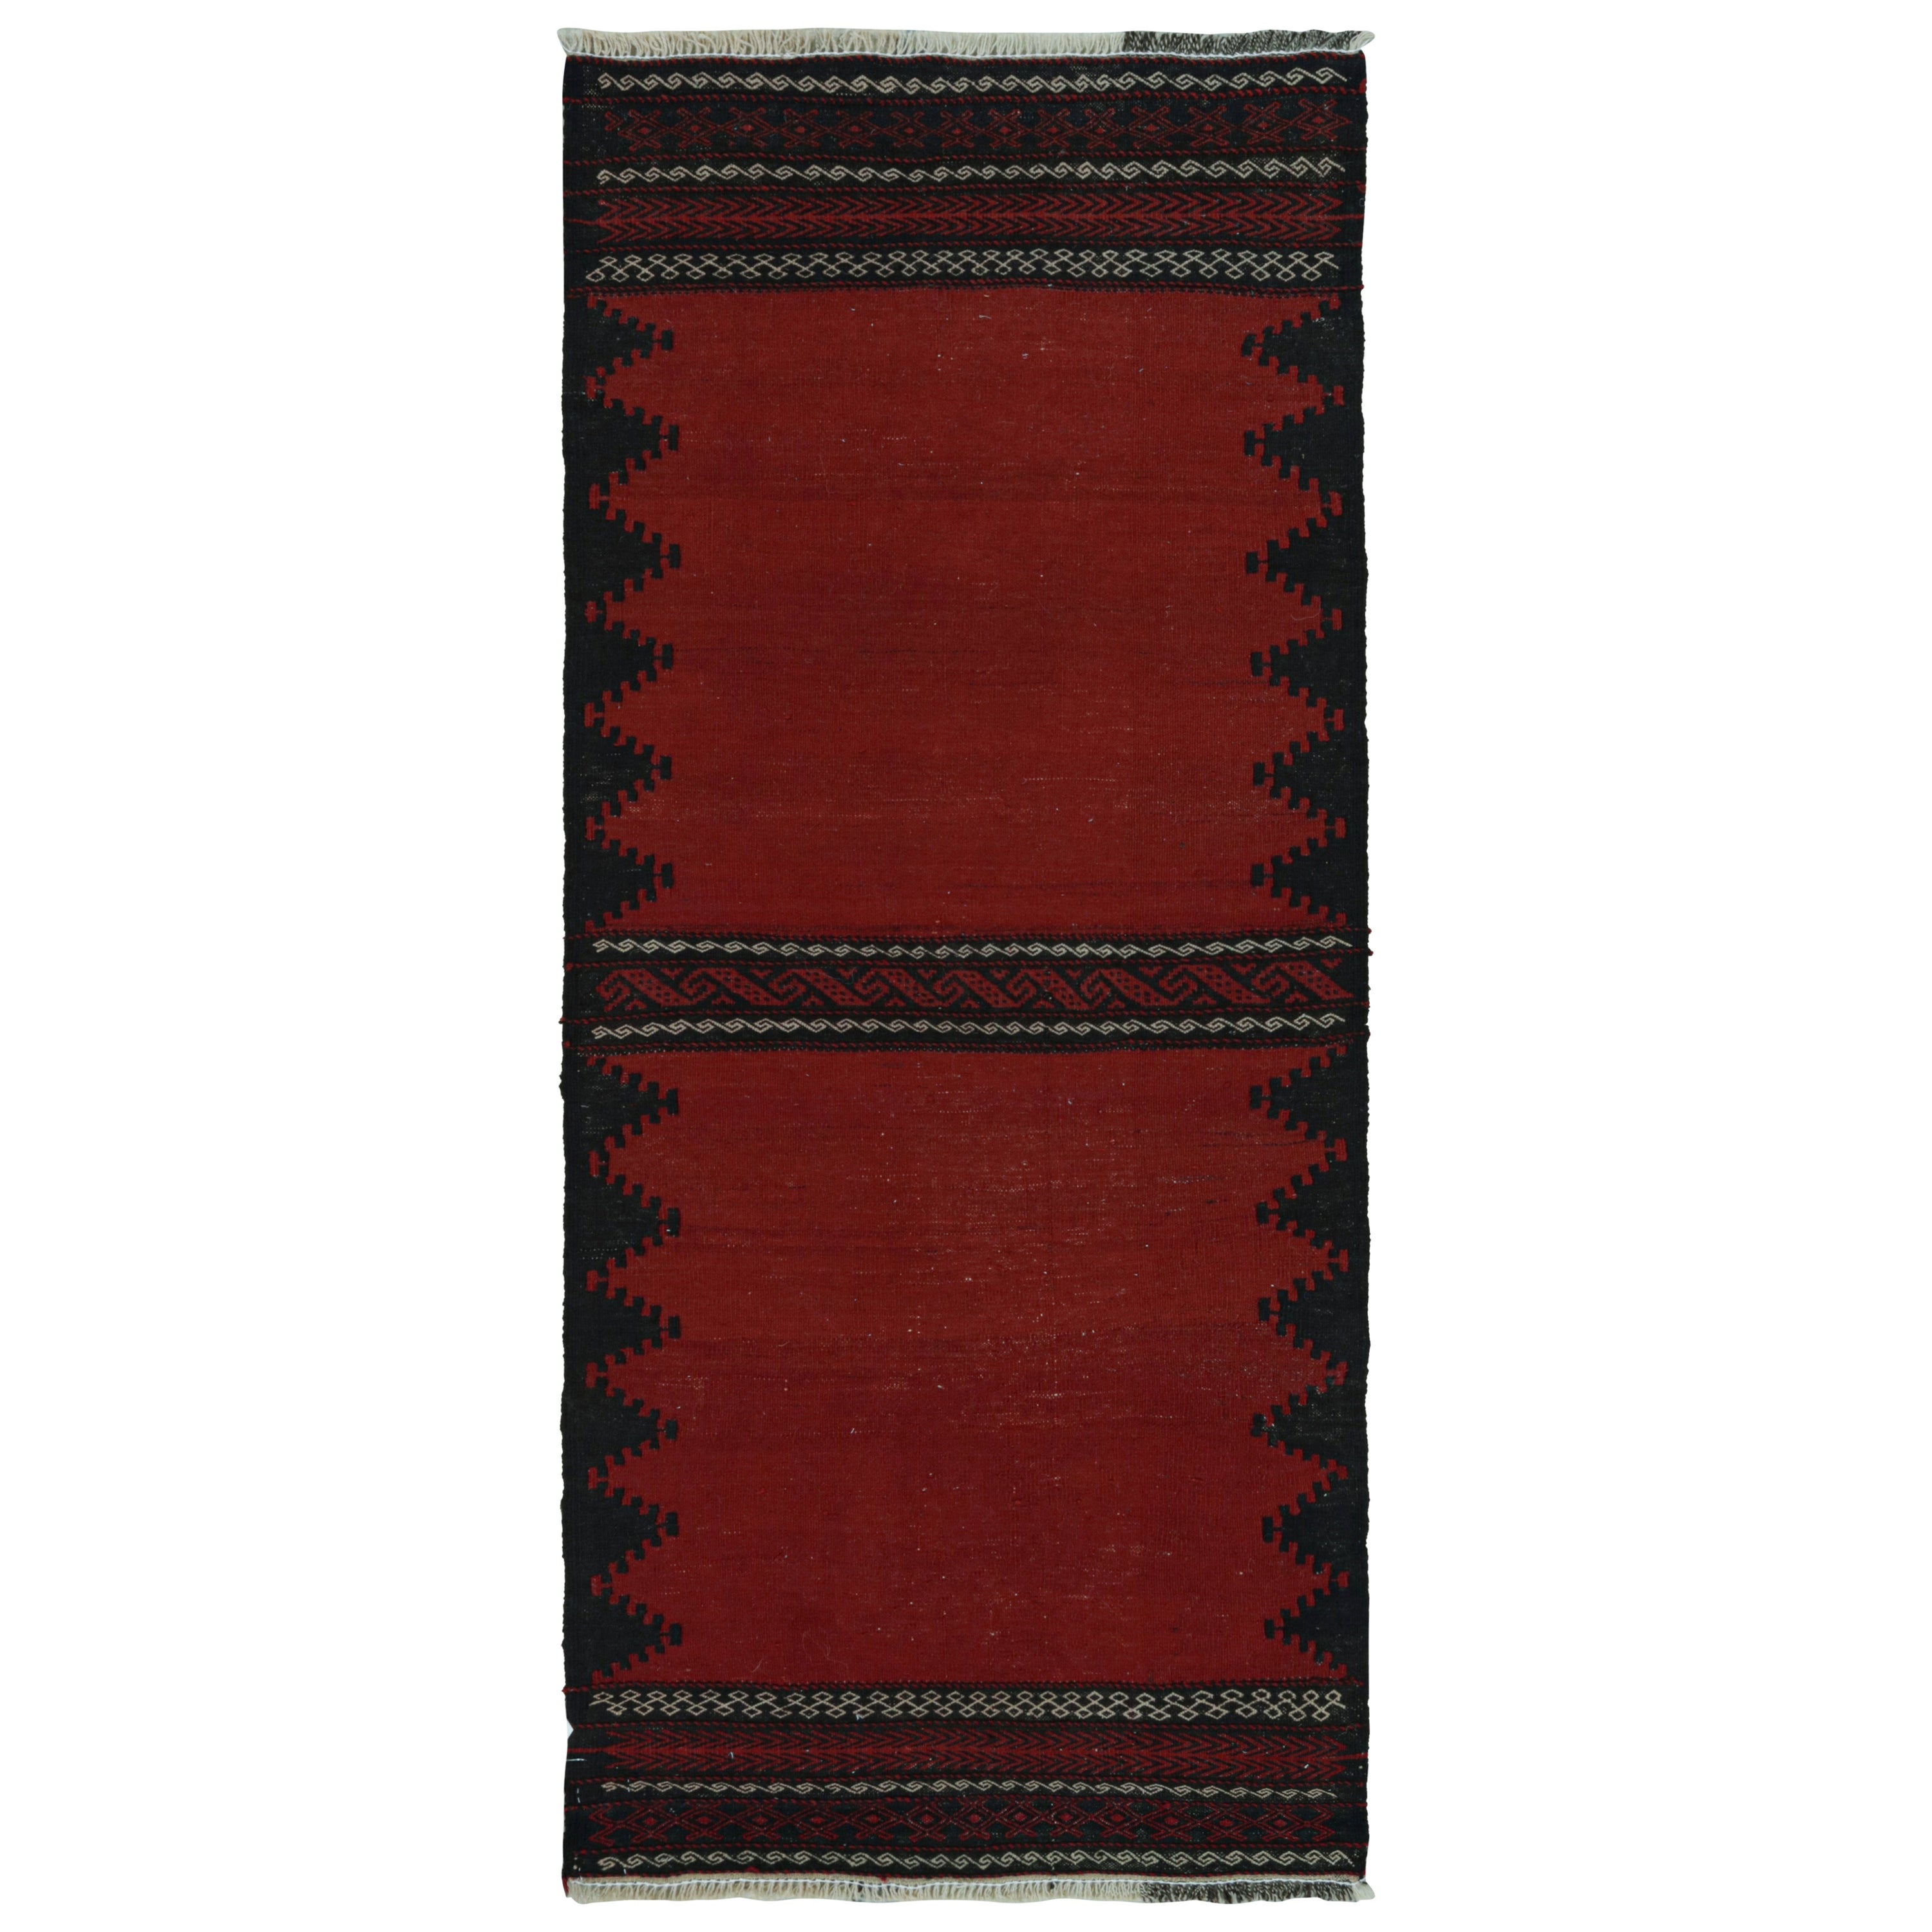 Vintage Afghan Kilim Scatter Rug with Geometric Patterns, from Rug & Kilim